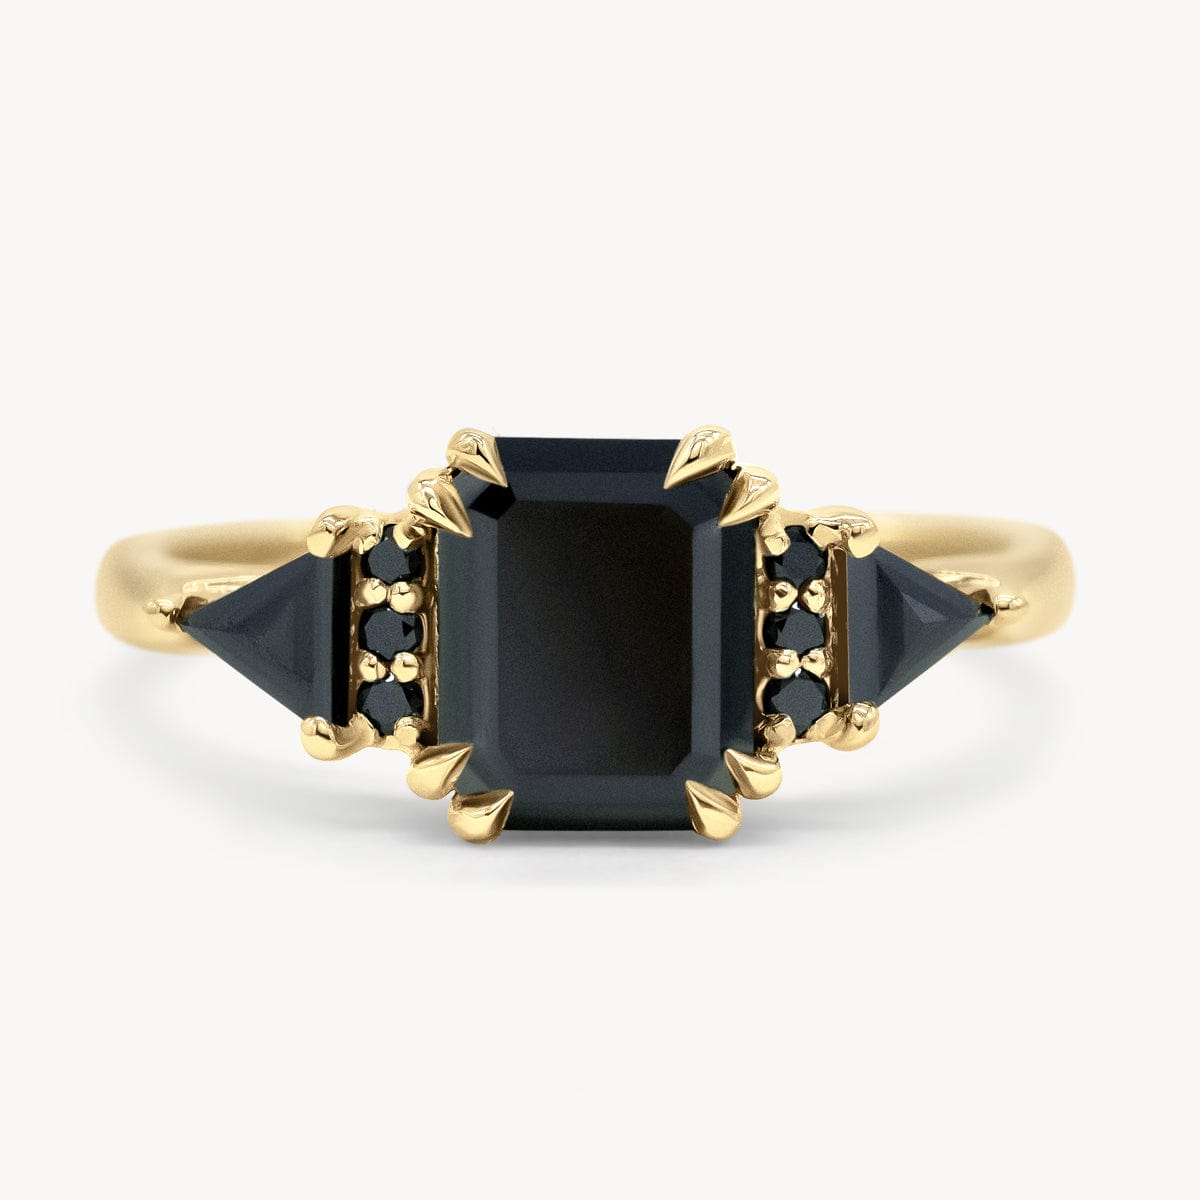 Emerald Cut Black Diamond & Diamond Engagement Ring 14k White Gold